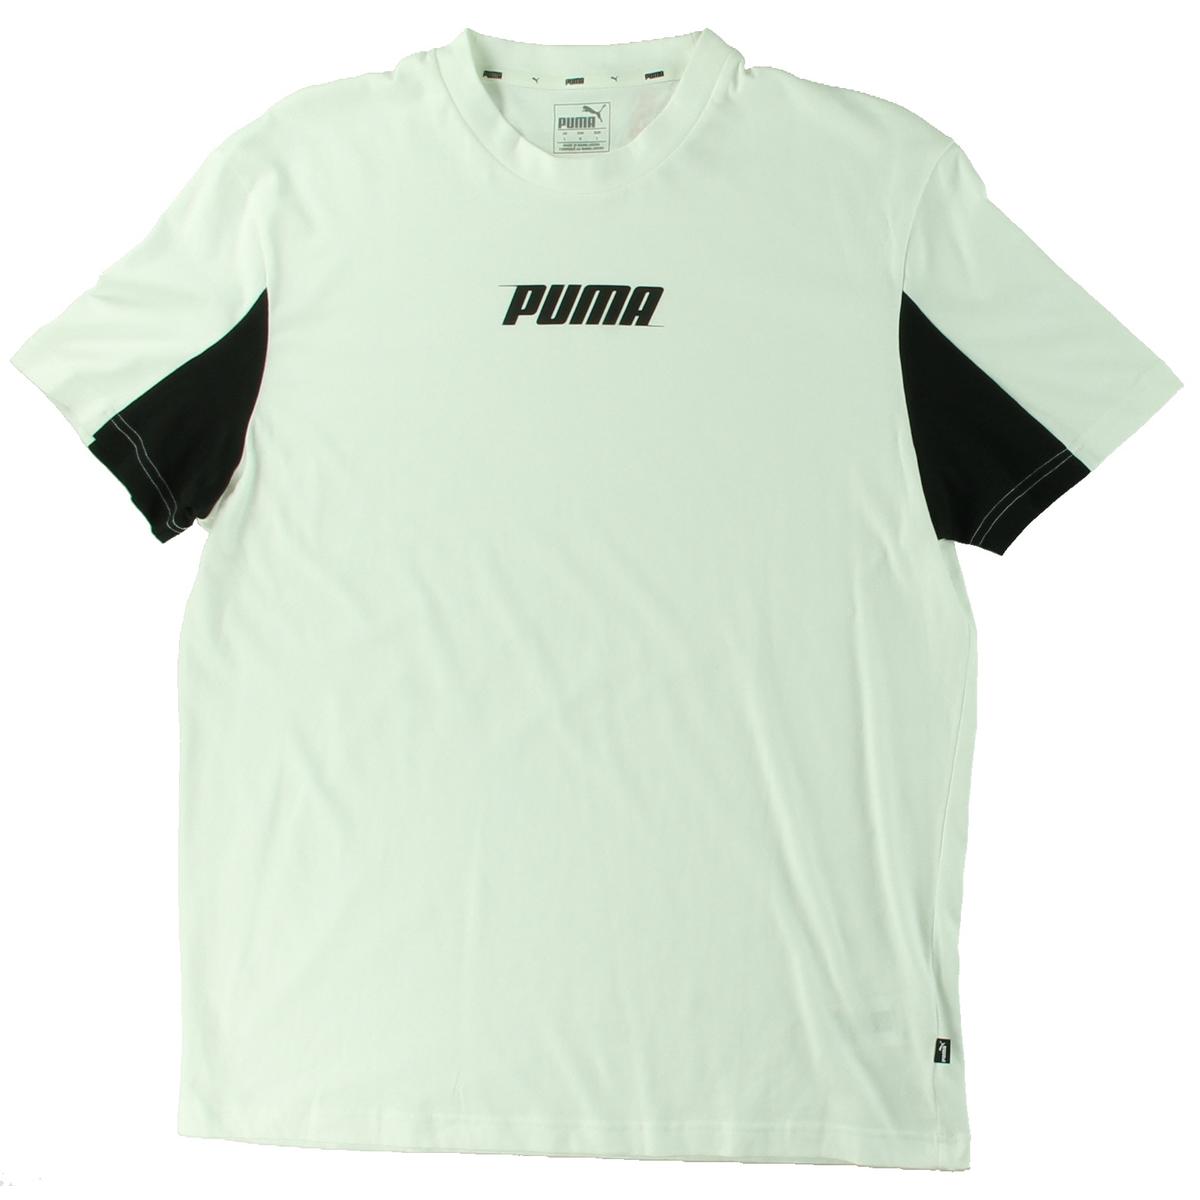 Puma Mens Rebel White F Cotton T-Shirt Athletic L BHFO 1567 | eBay